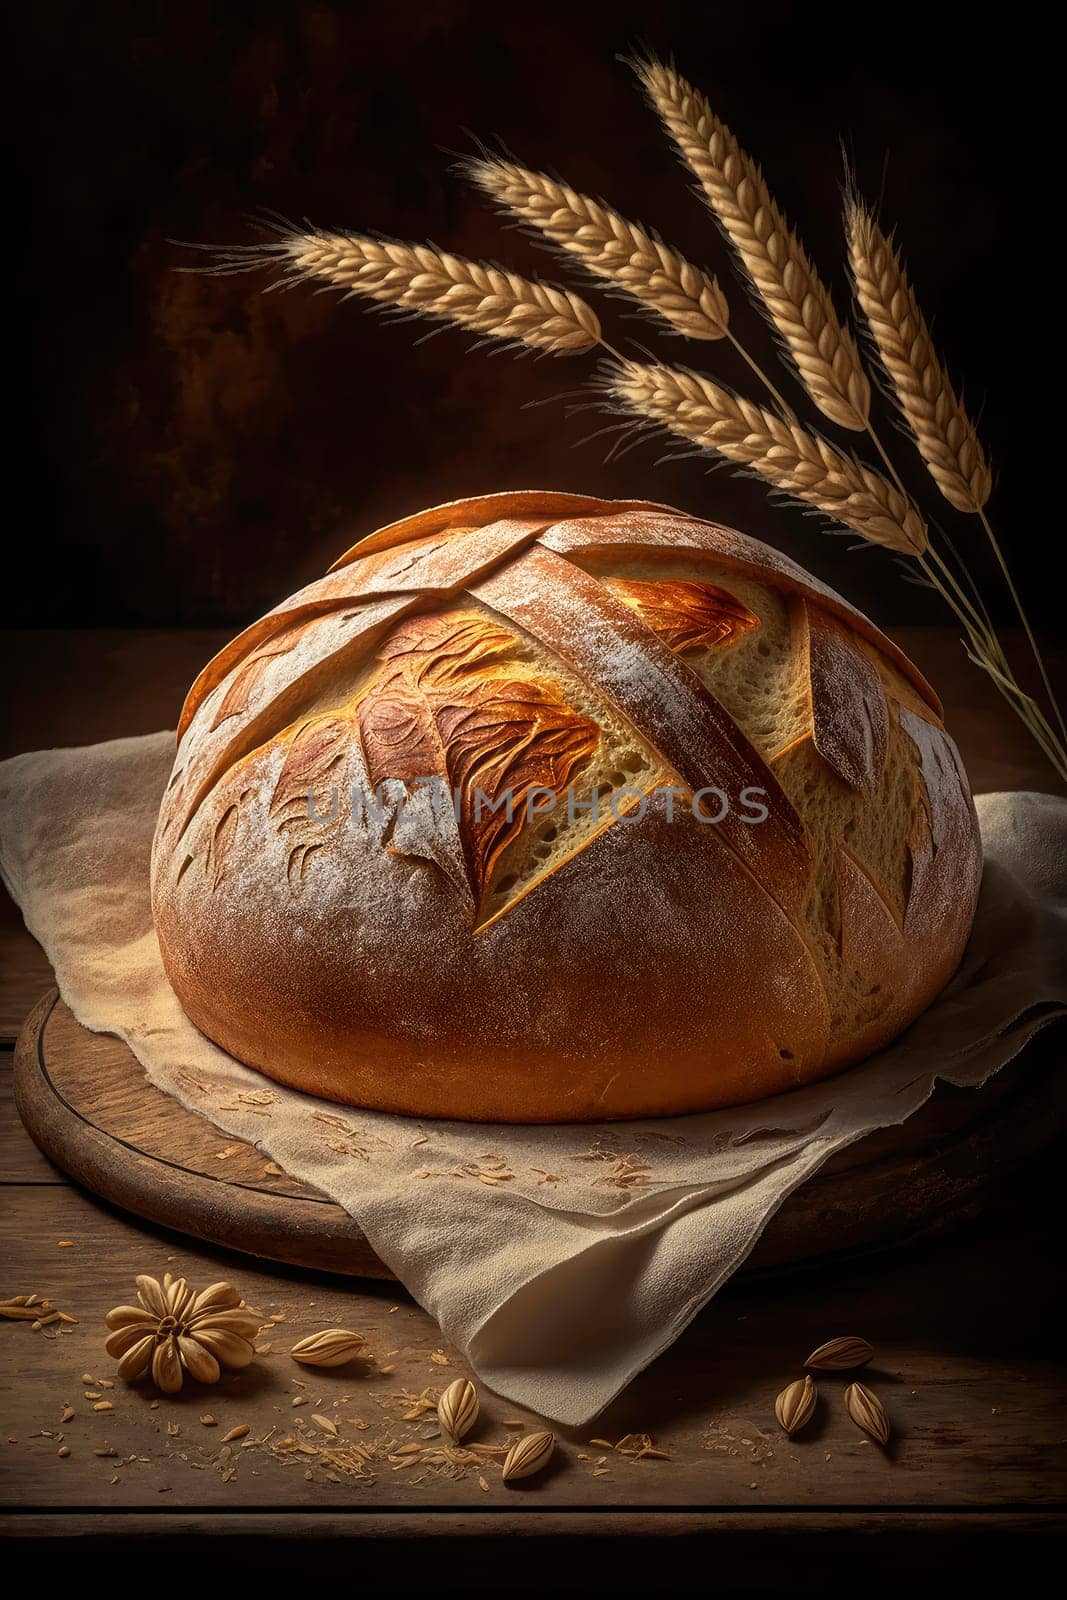 freshly baked bread on the table. by yanadjana